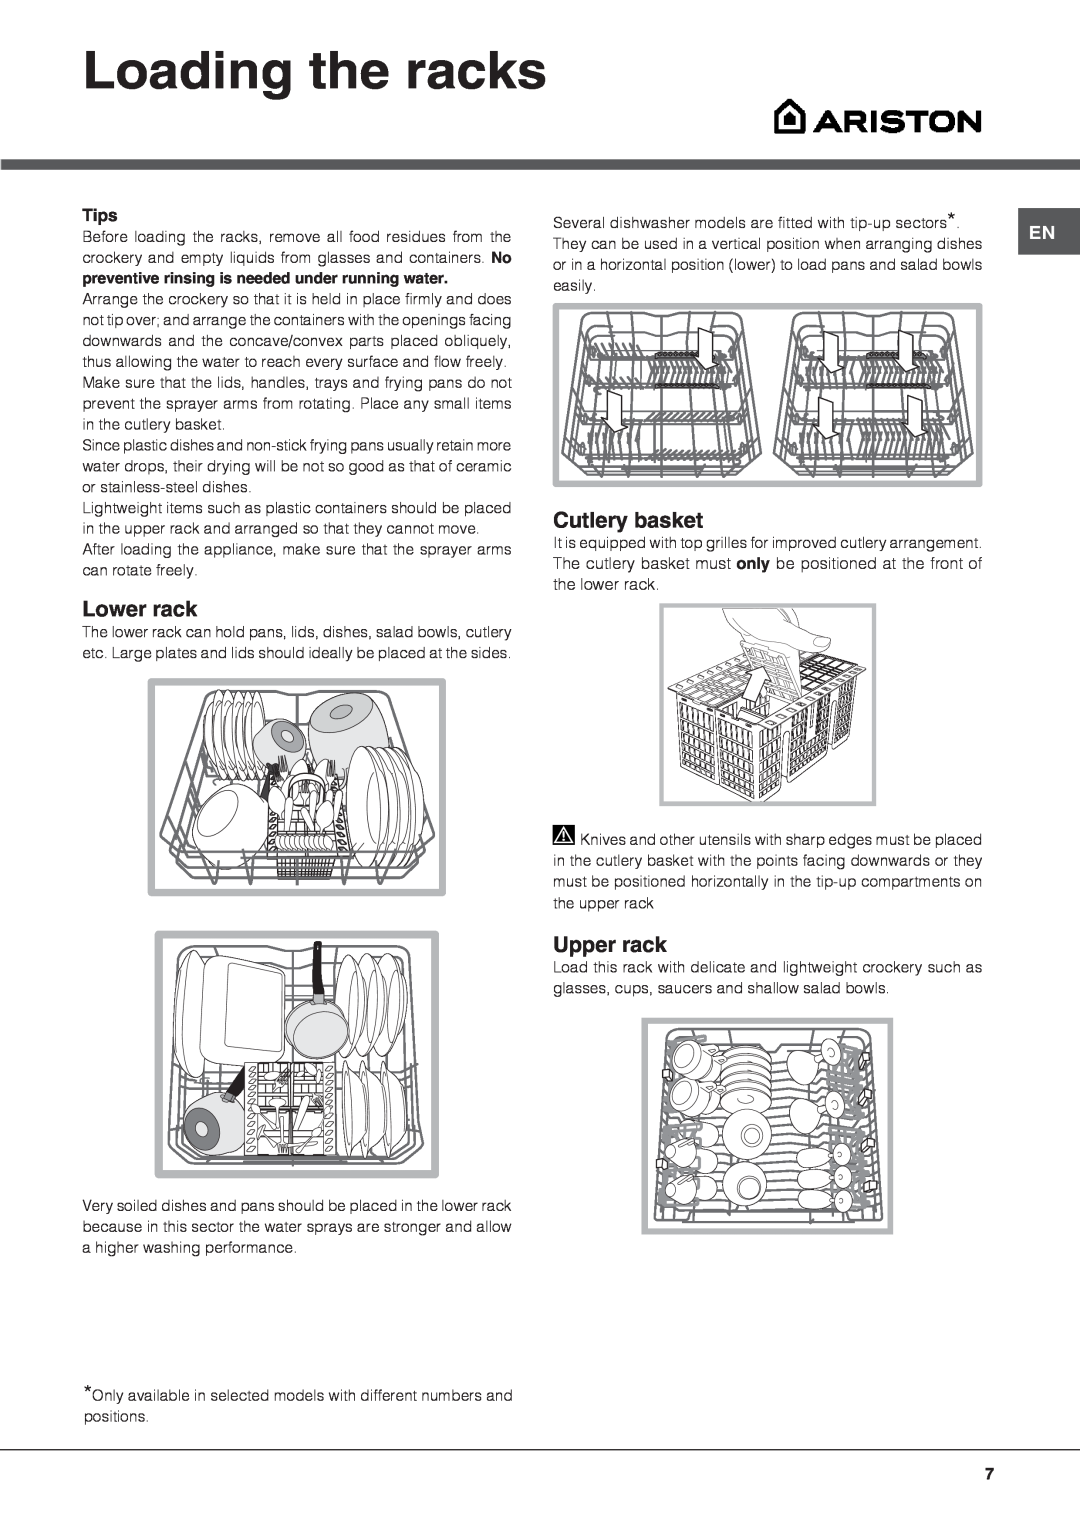 Ariston LBF 5B manual Loading the racks, Cutlery basket, Lower rack, Upper rack, Tips 